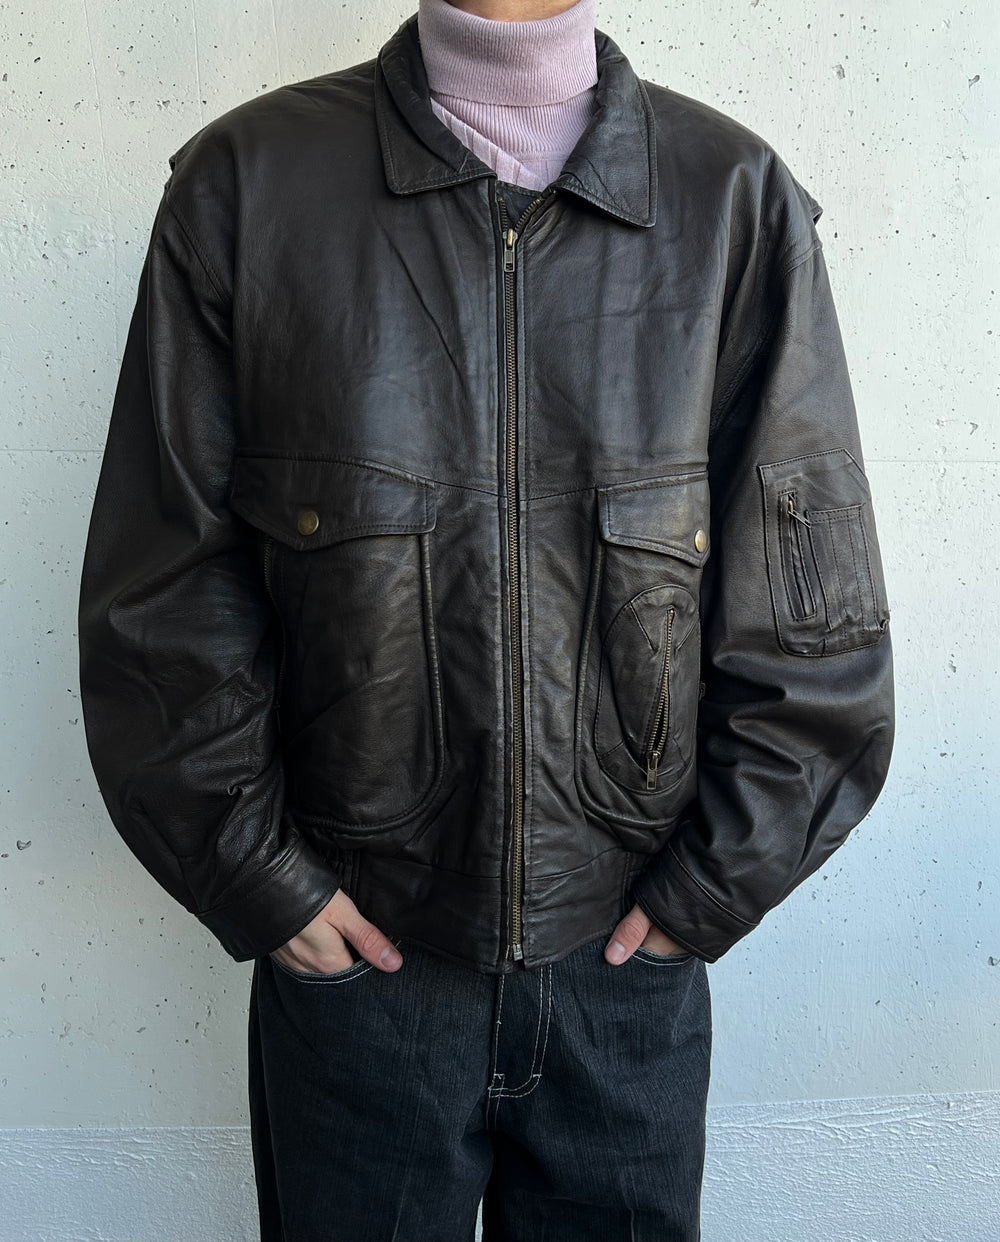 Vintage 80s/90s Heavy Leather Jacket (XL)